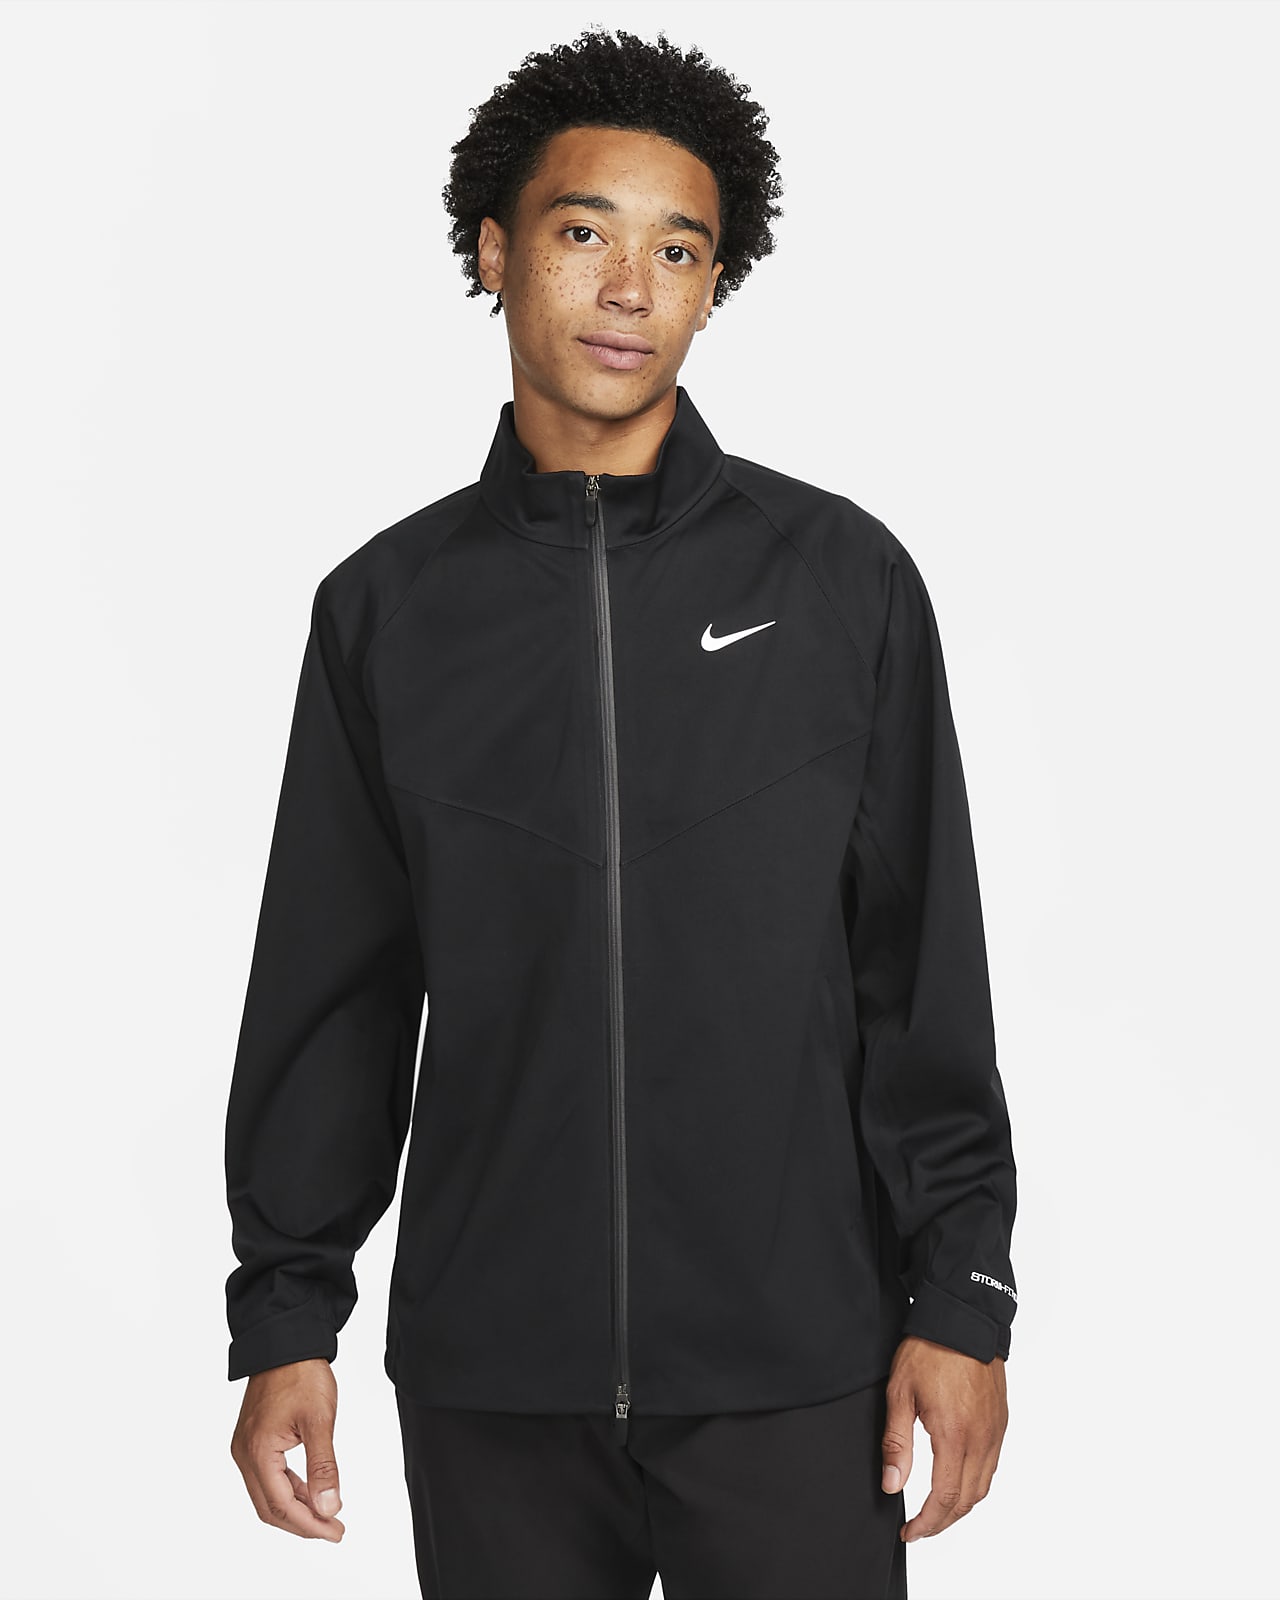 Storm-FIT ADV Men's Jacket. Nike.com